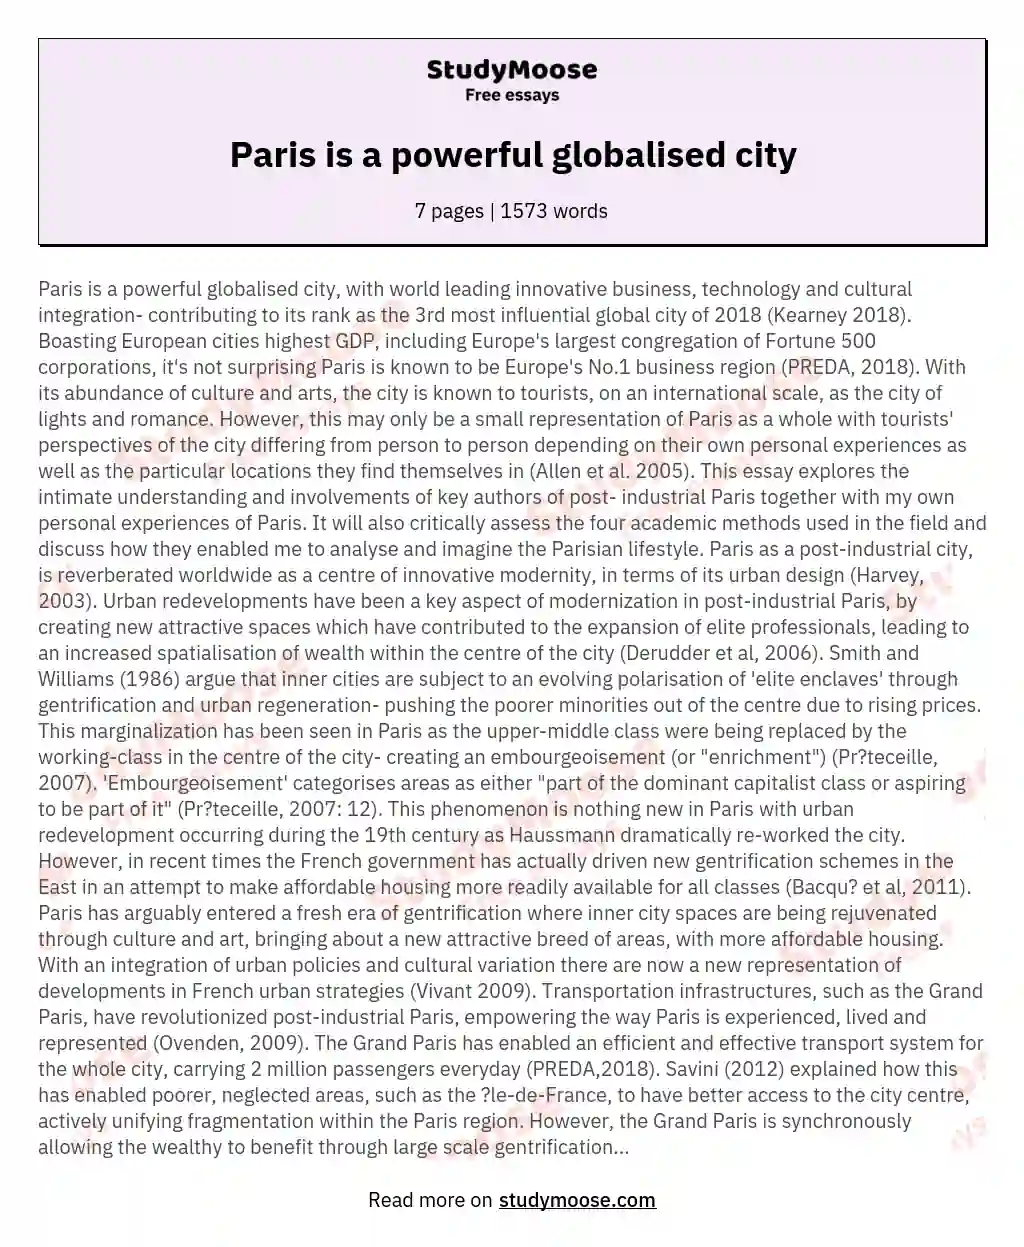 Paris is a powerful globalised city essay